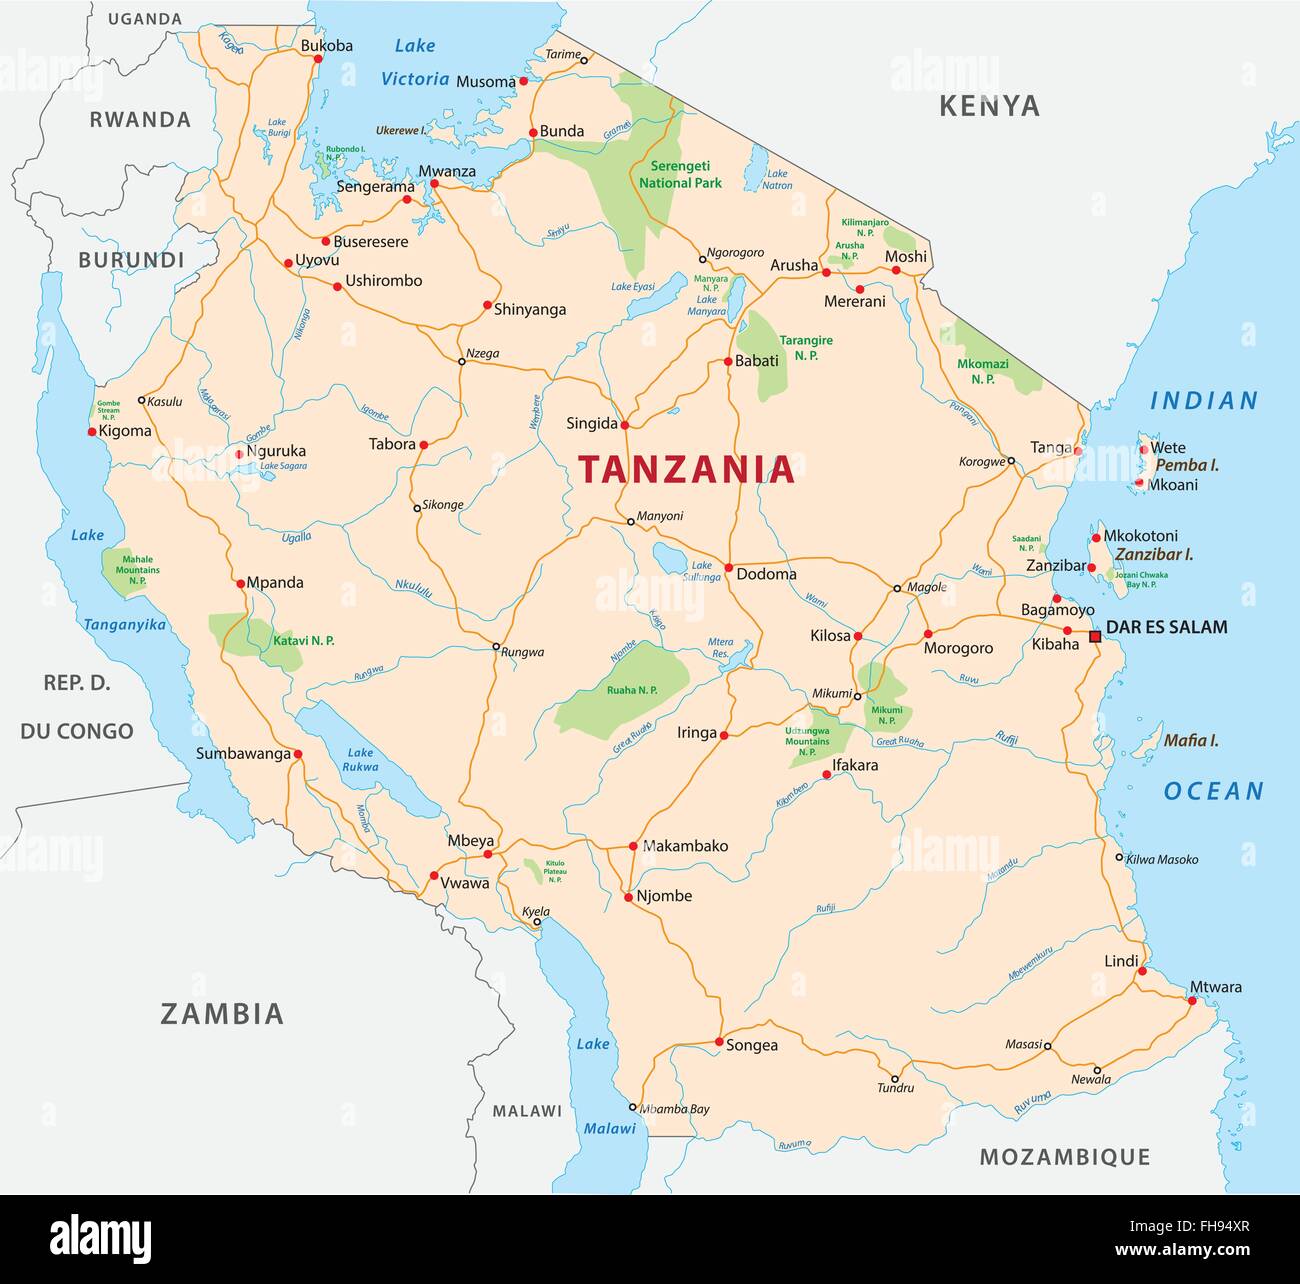 Tanzania road and National Park map Stock Vector